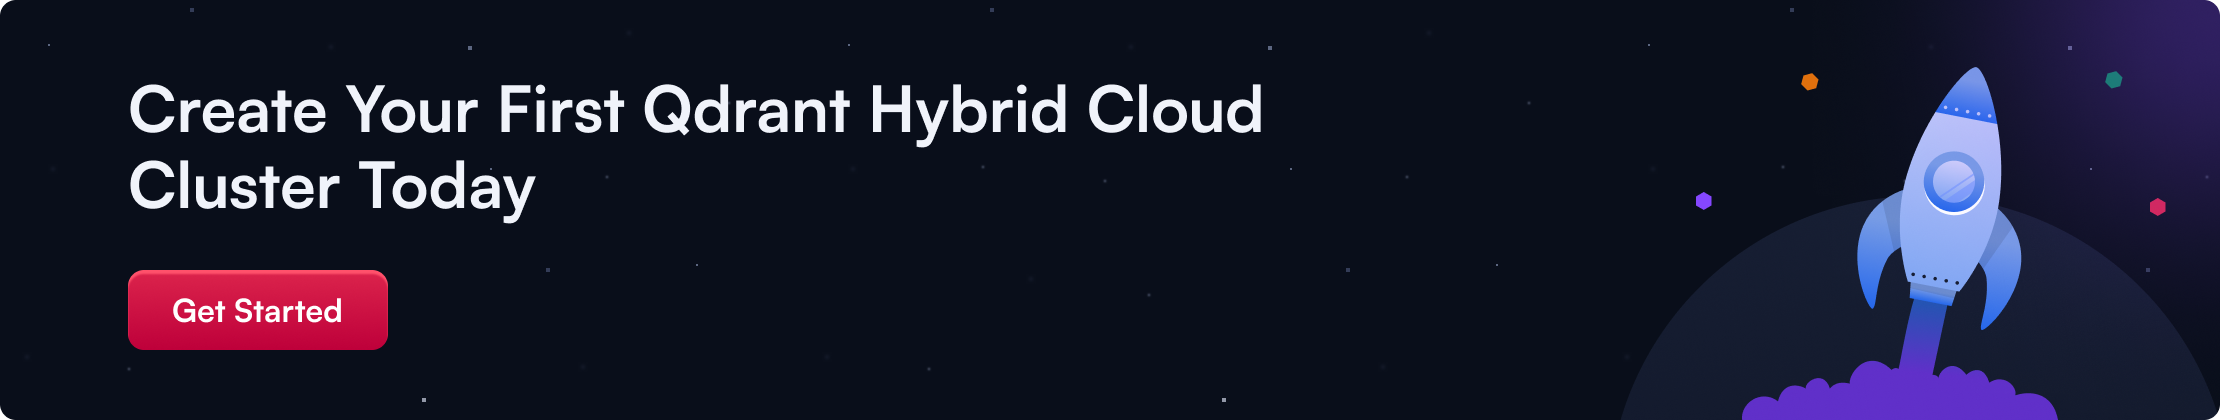 hybrid-cloud-cta.png